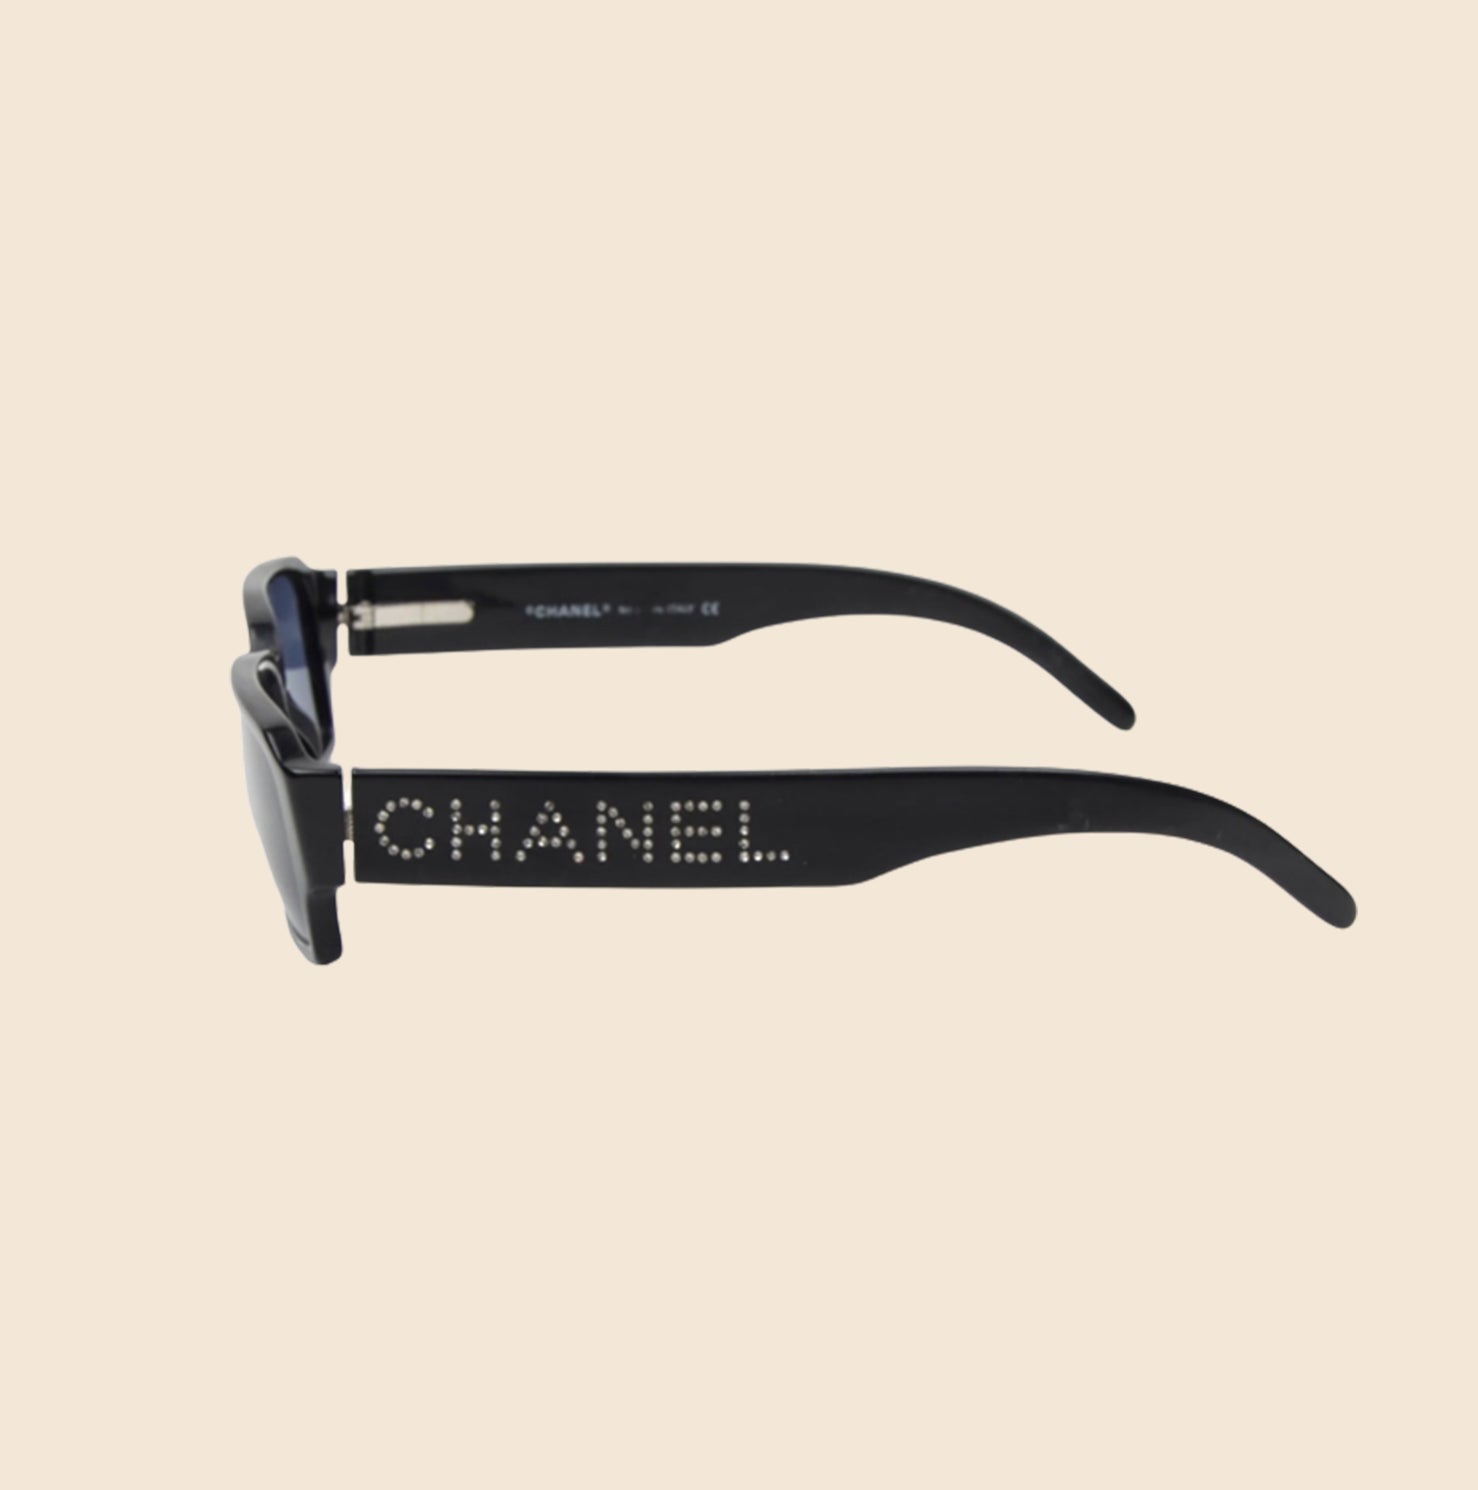 chanel logo glasses